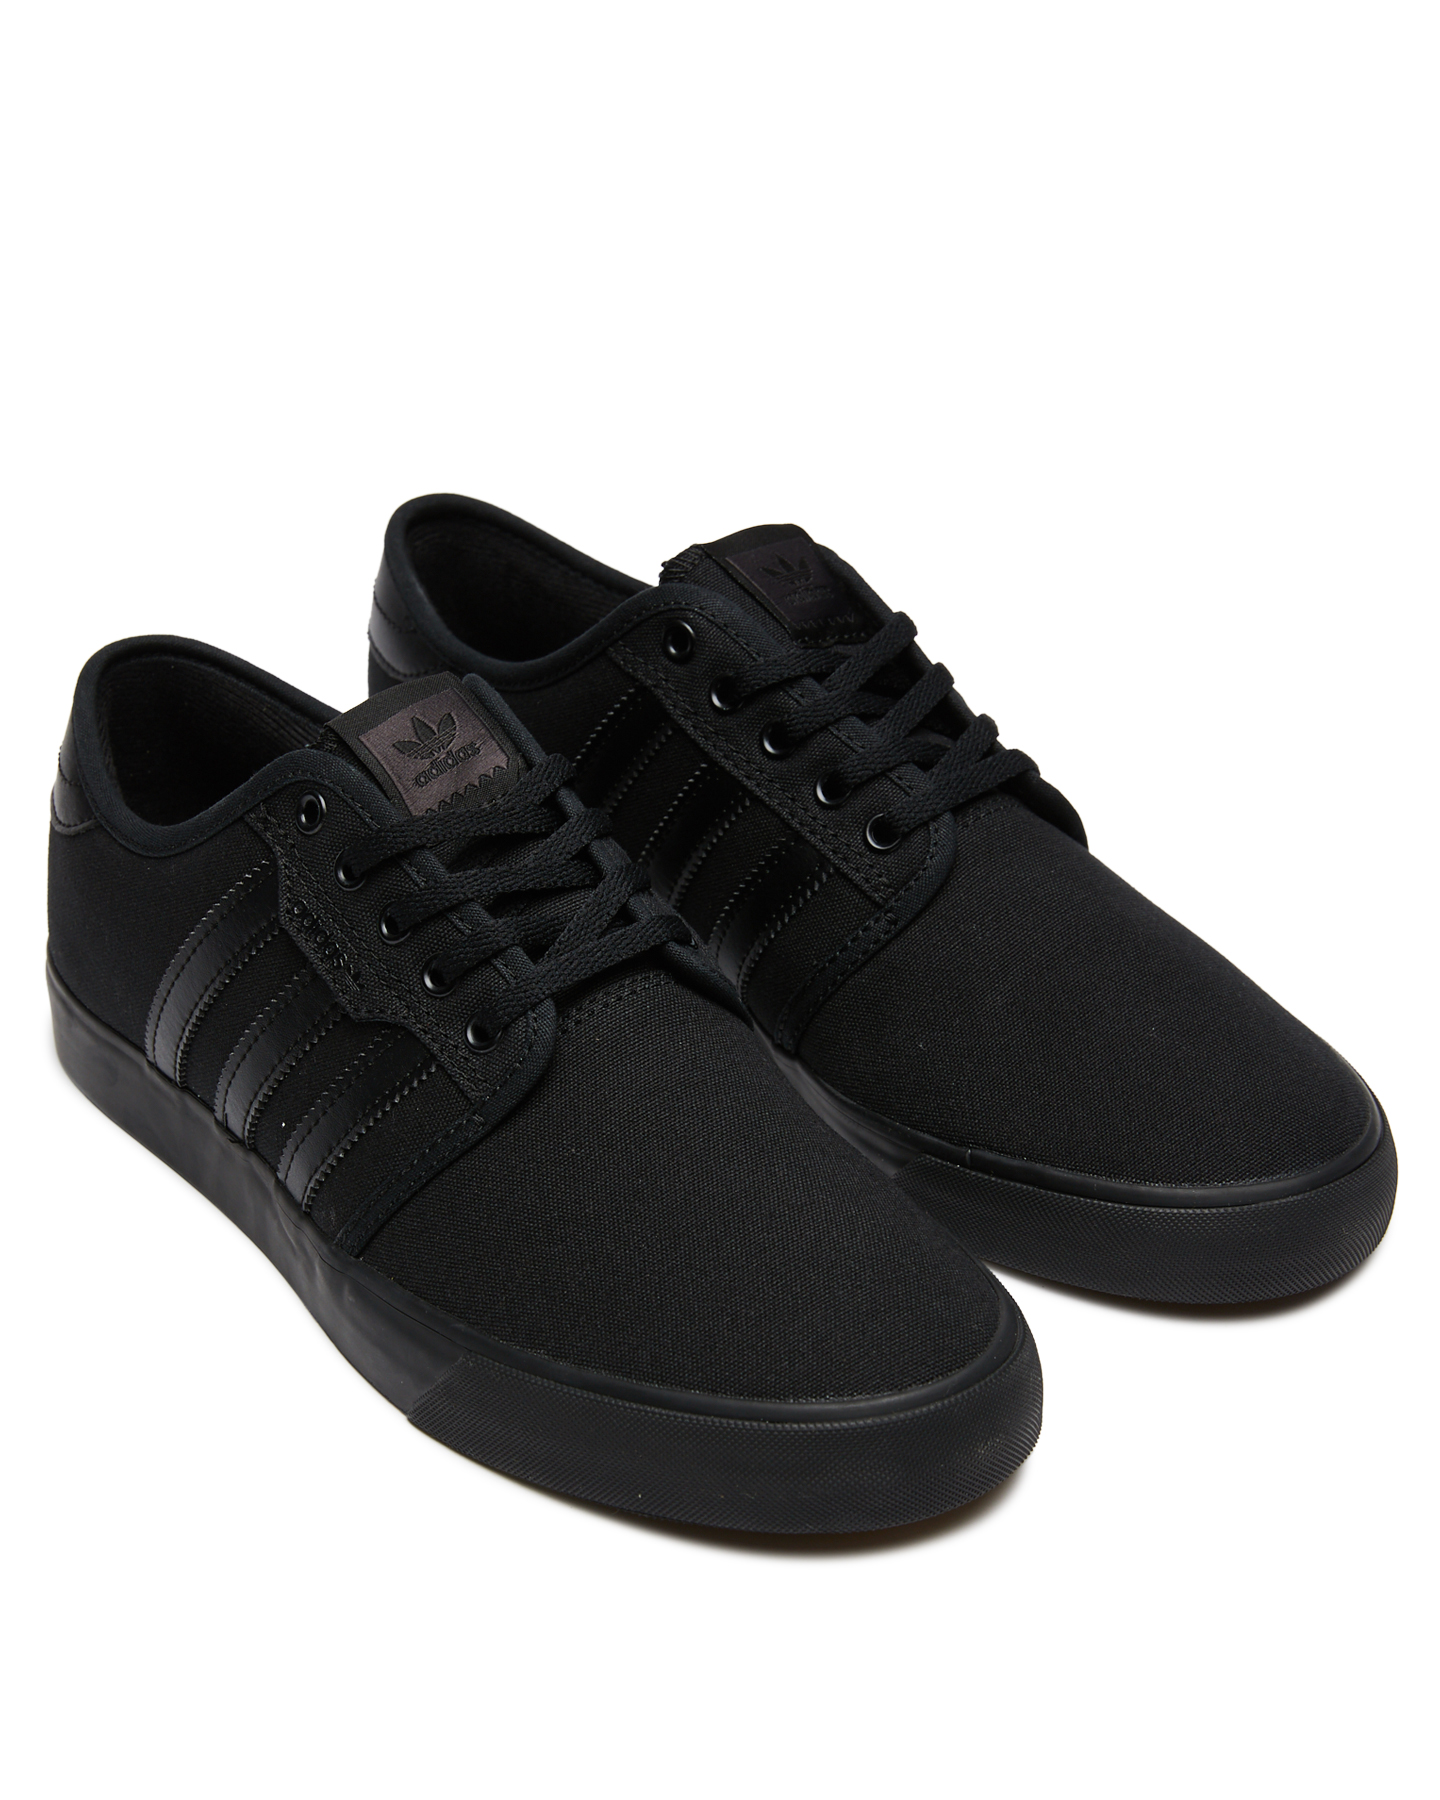 Adidas Womens Seeley Shoe - Black Black | SurfStitch